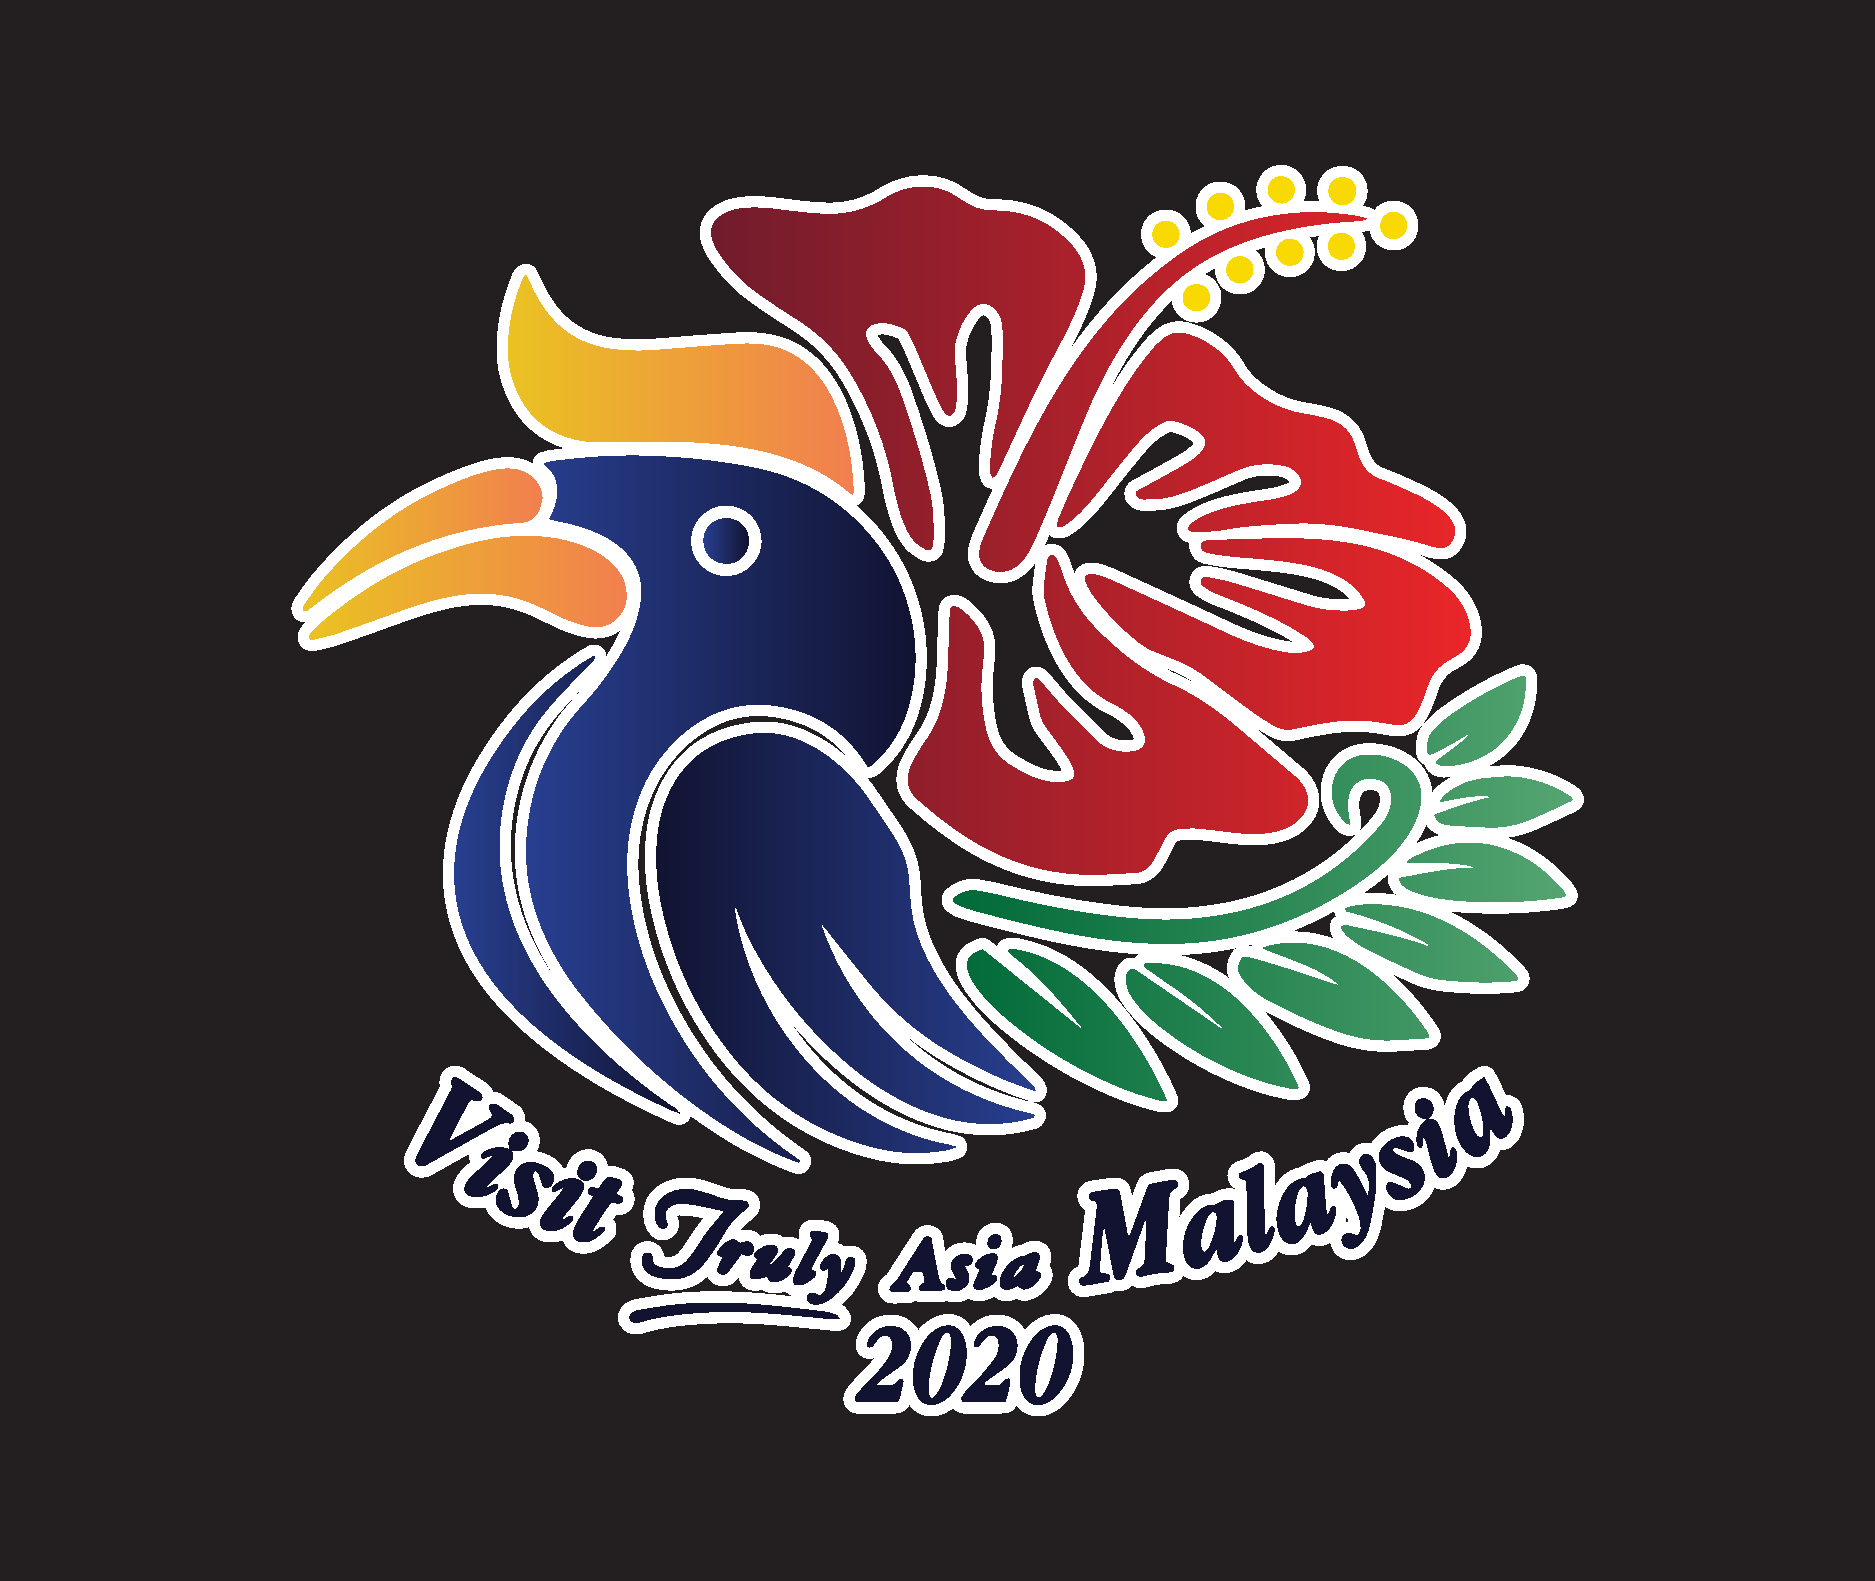 logo visit malaysia 2020